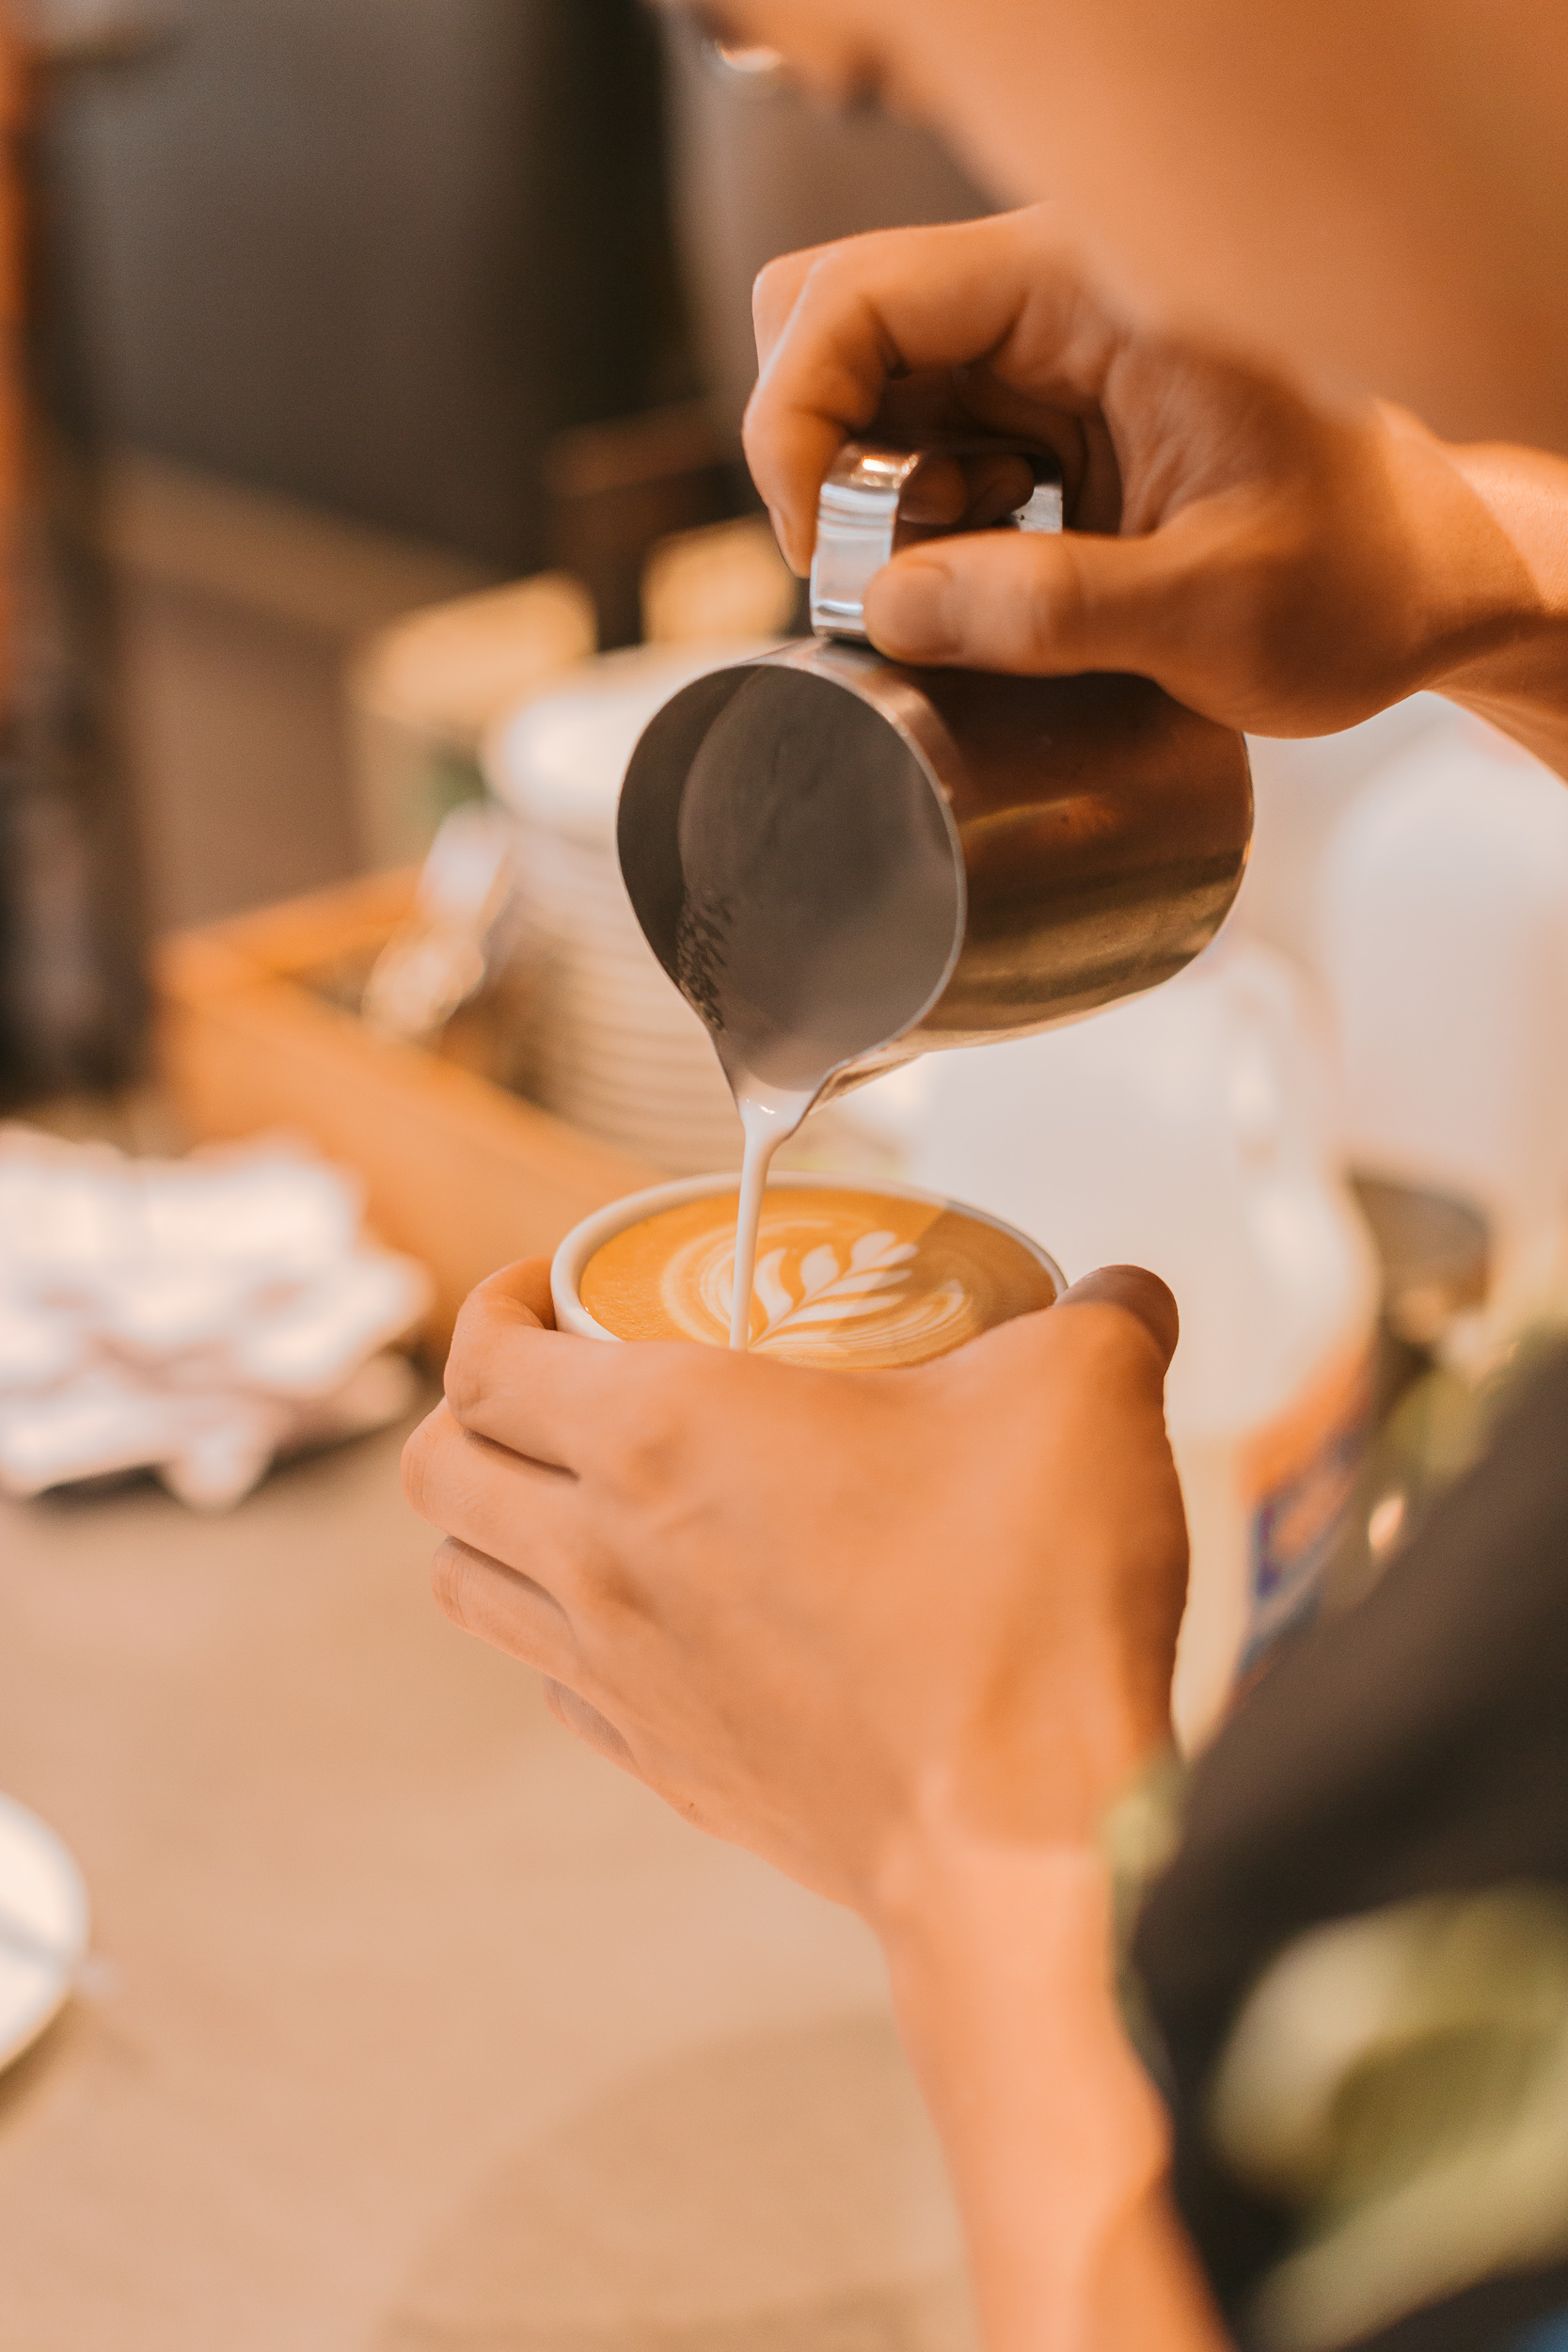 Barista pouring latte art